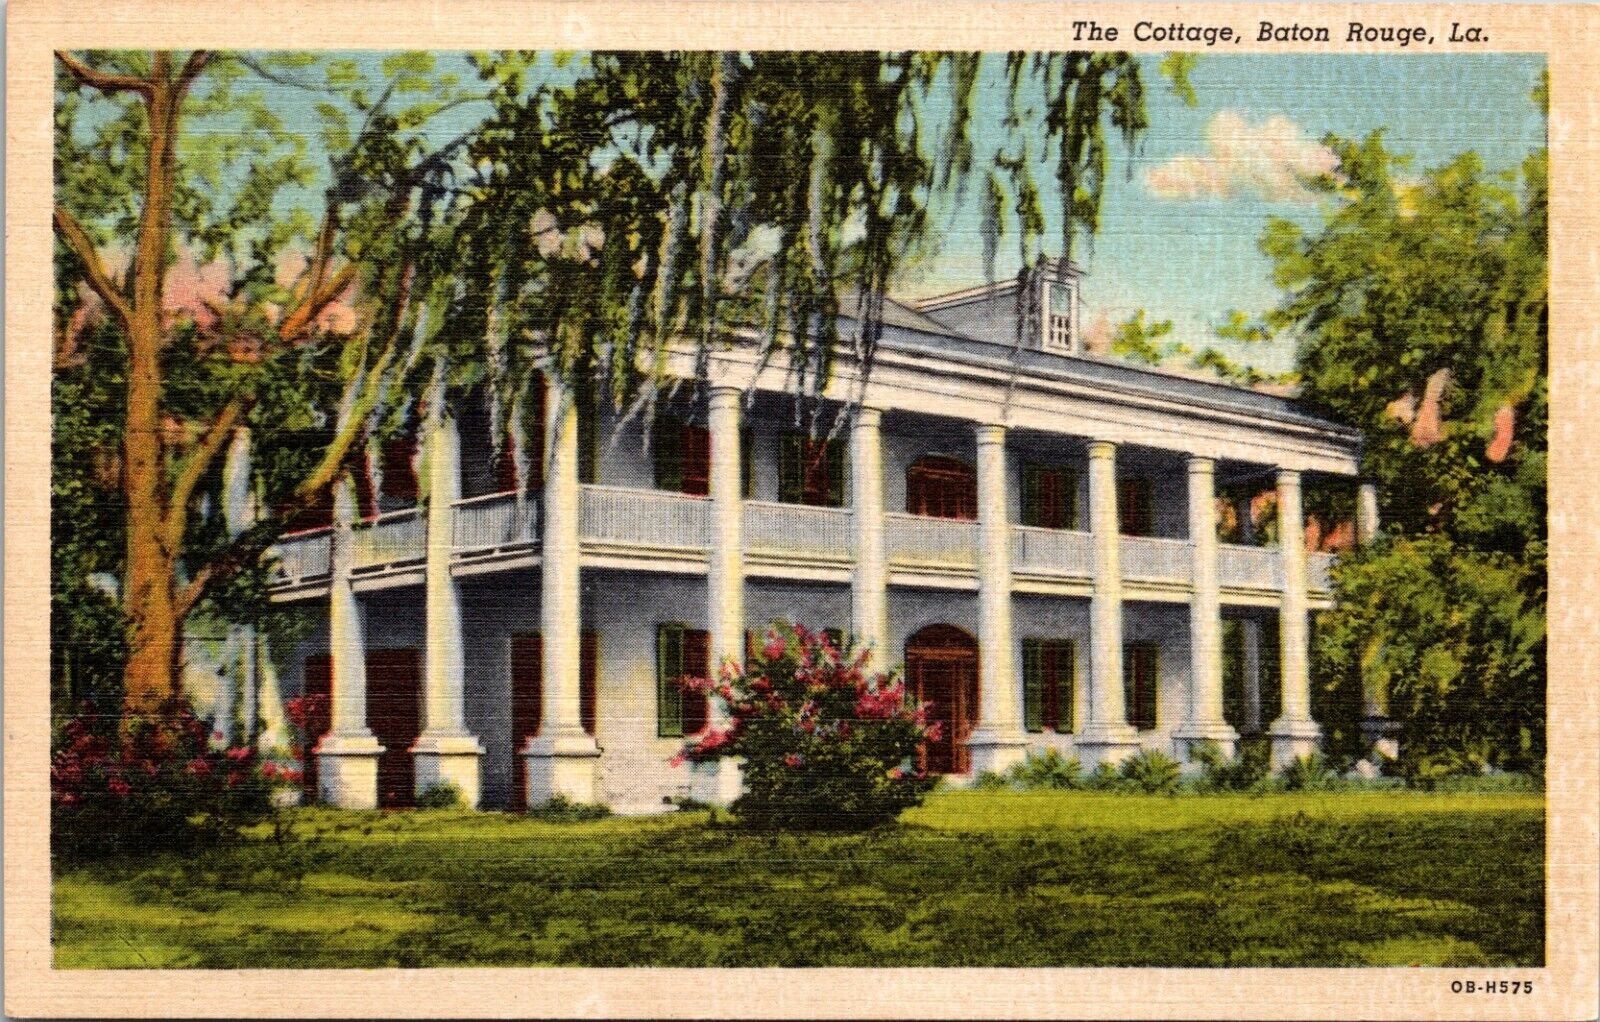 The Cottage, Baton Rouge, Louisiana - Postcard